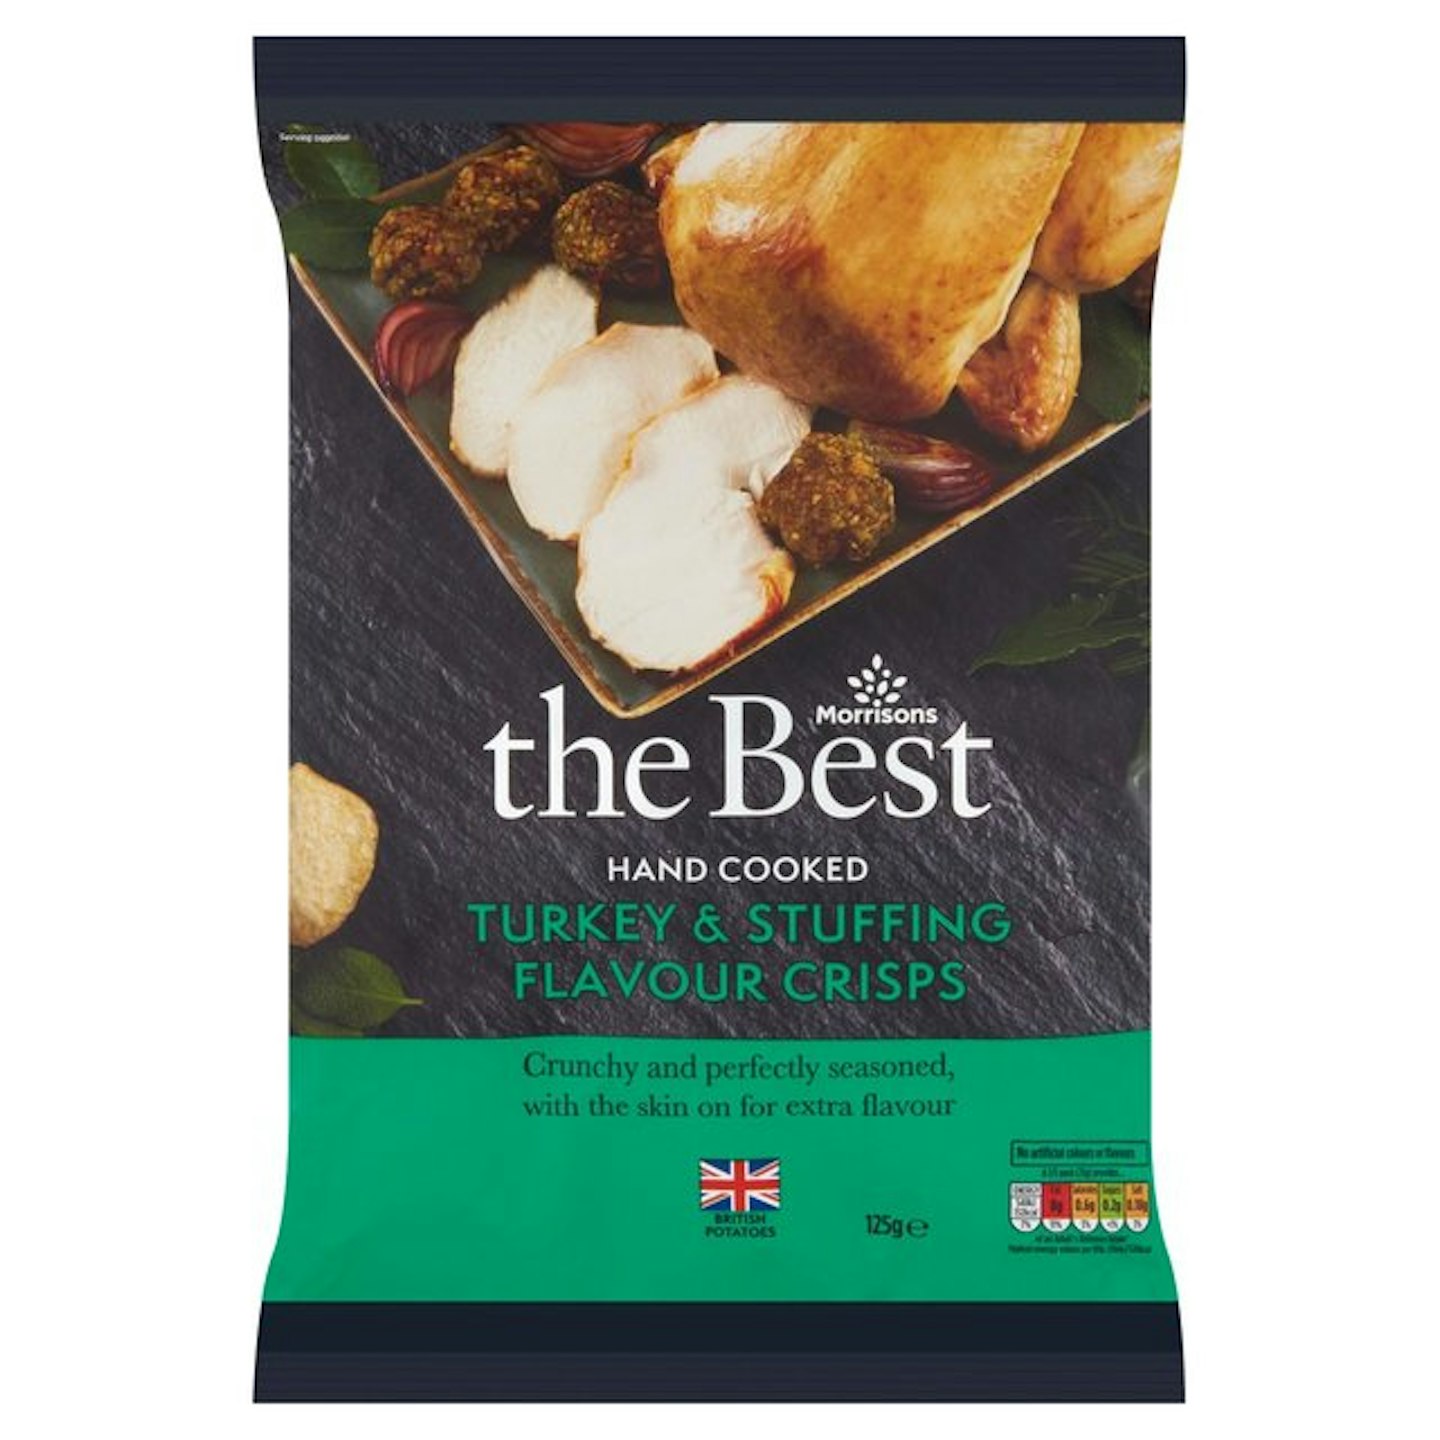 Morrisons The Best Turkey & Stuffing Crisps, £1.09